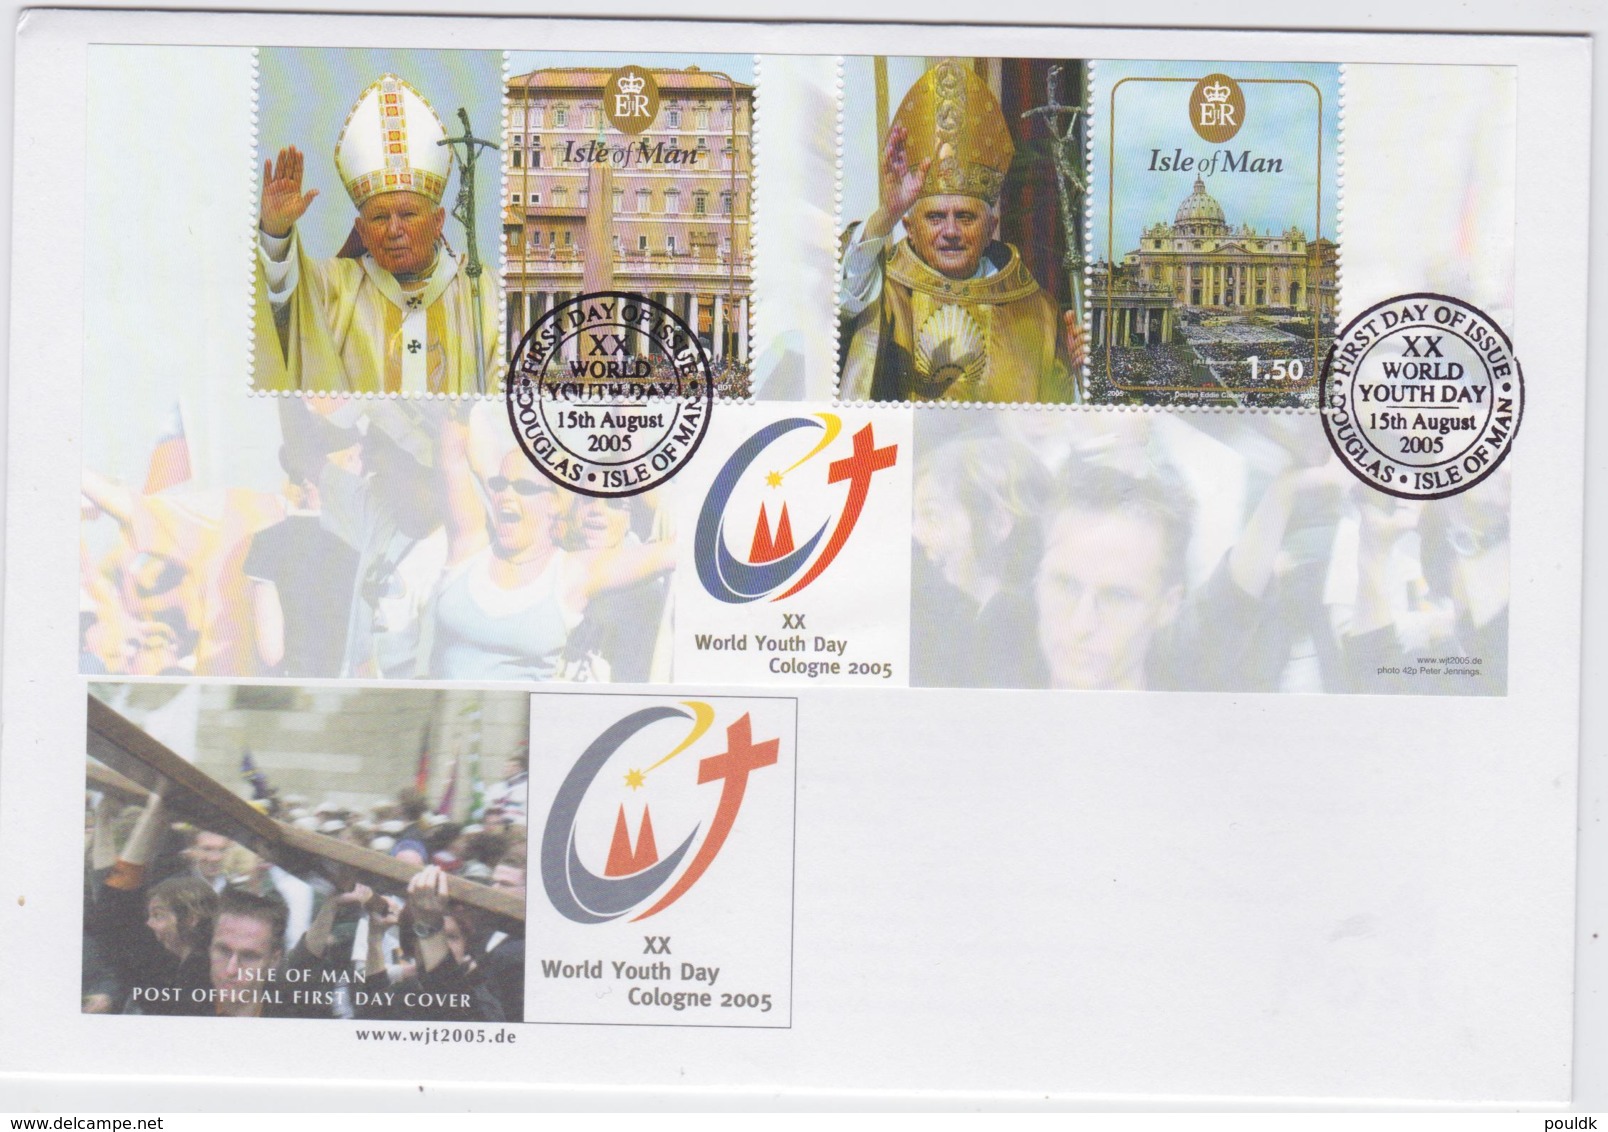 Isle Of Man 2005 FDC World Youth Day Pope John Paul II - Pope Benedict XVI Souvenir Sheet (NB**LAR8-58) - Papas